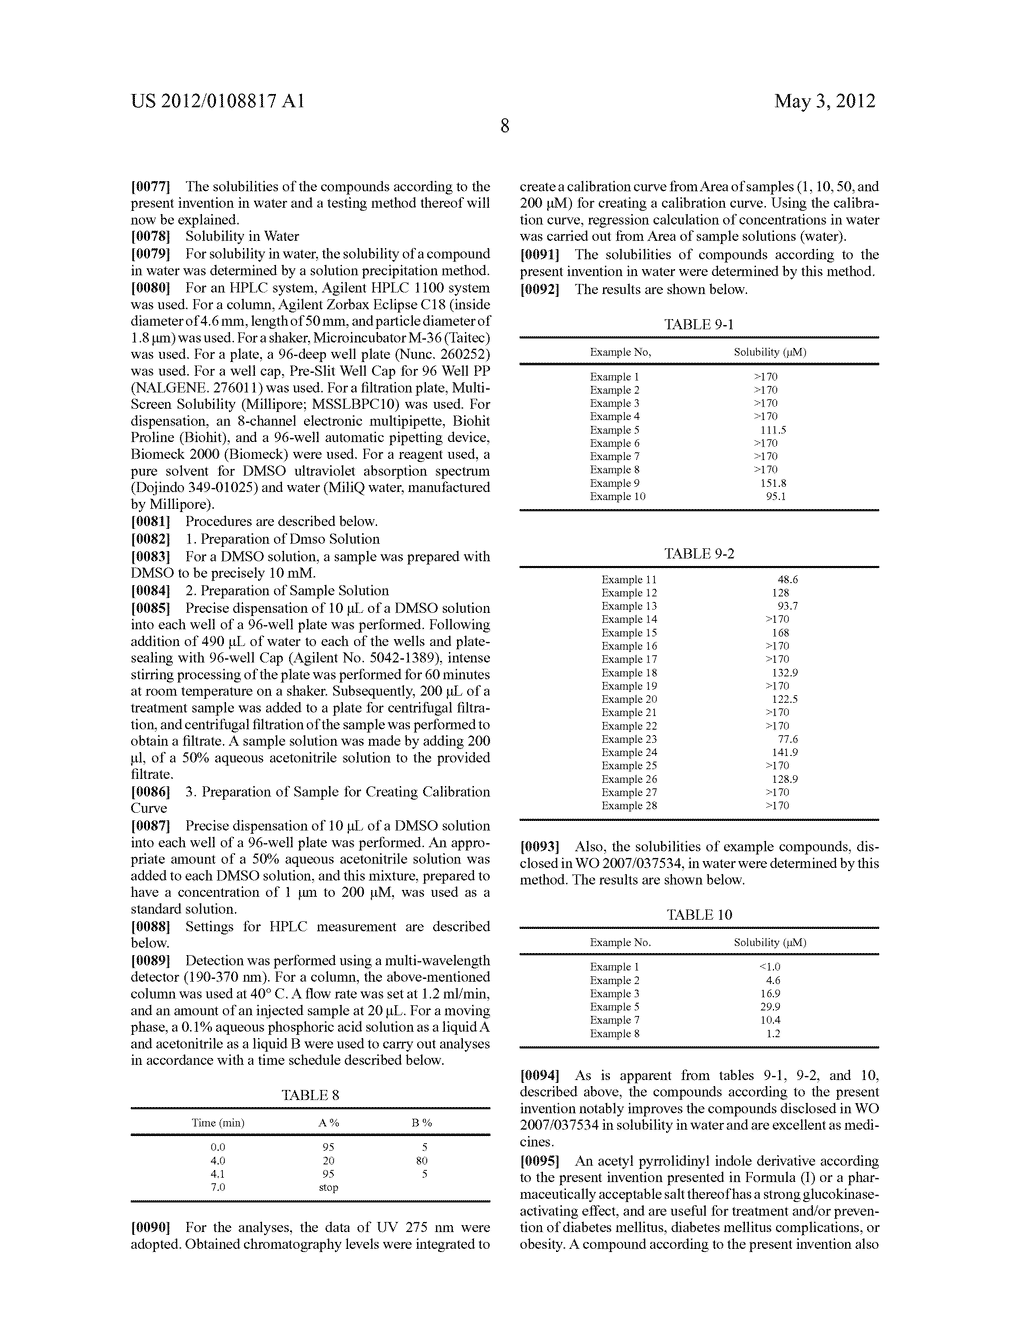 ACETYL PYRROLIDINYL INDOLE DERIVATIVE - diagram, schematic, and image 09